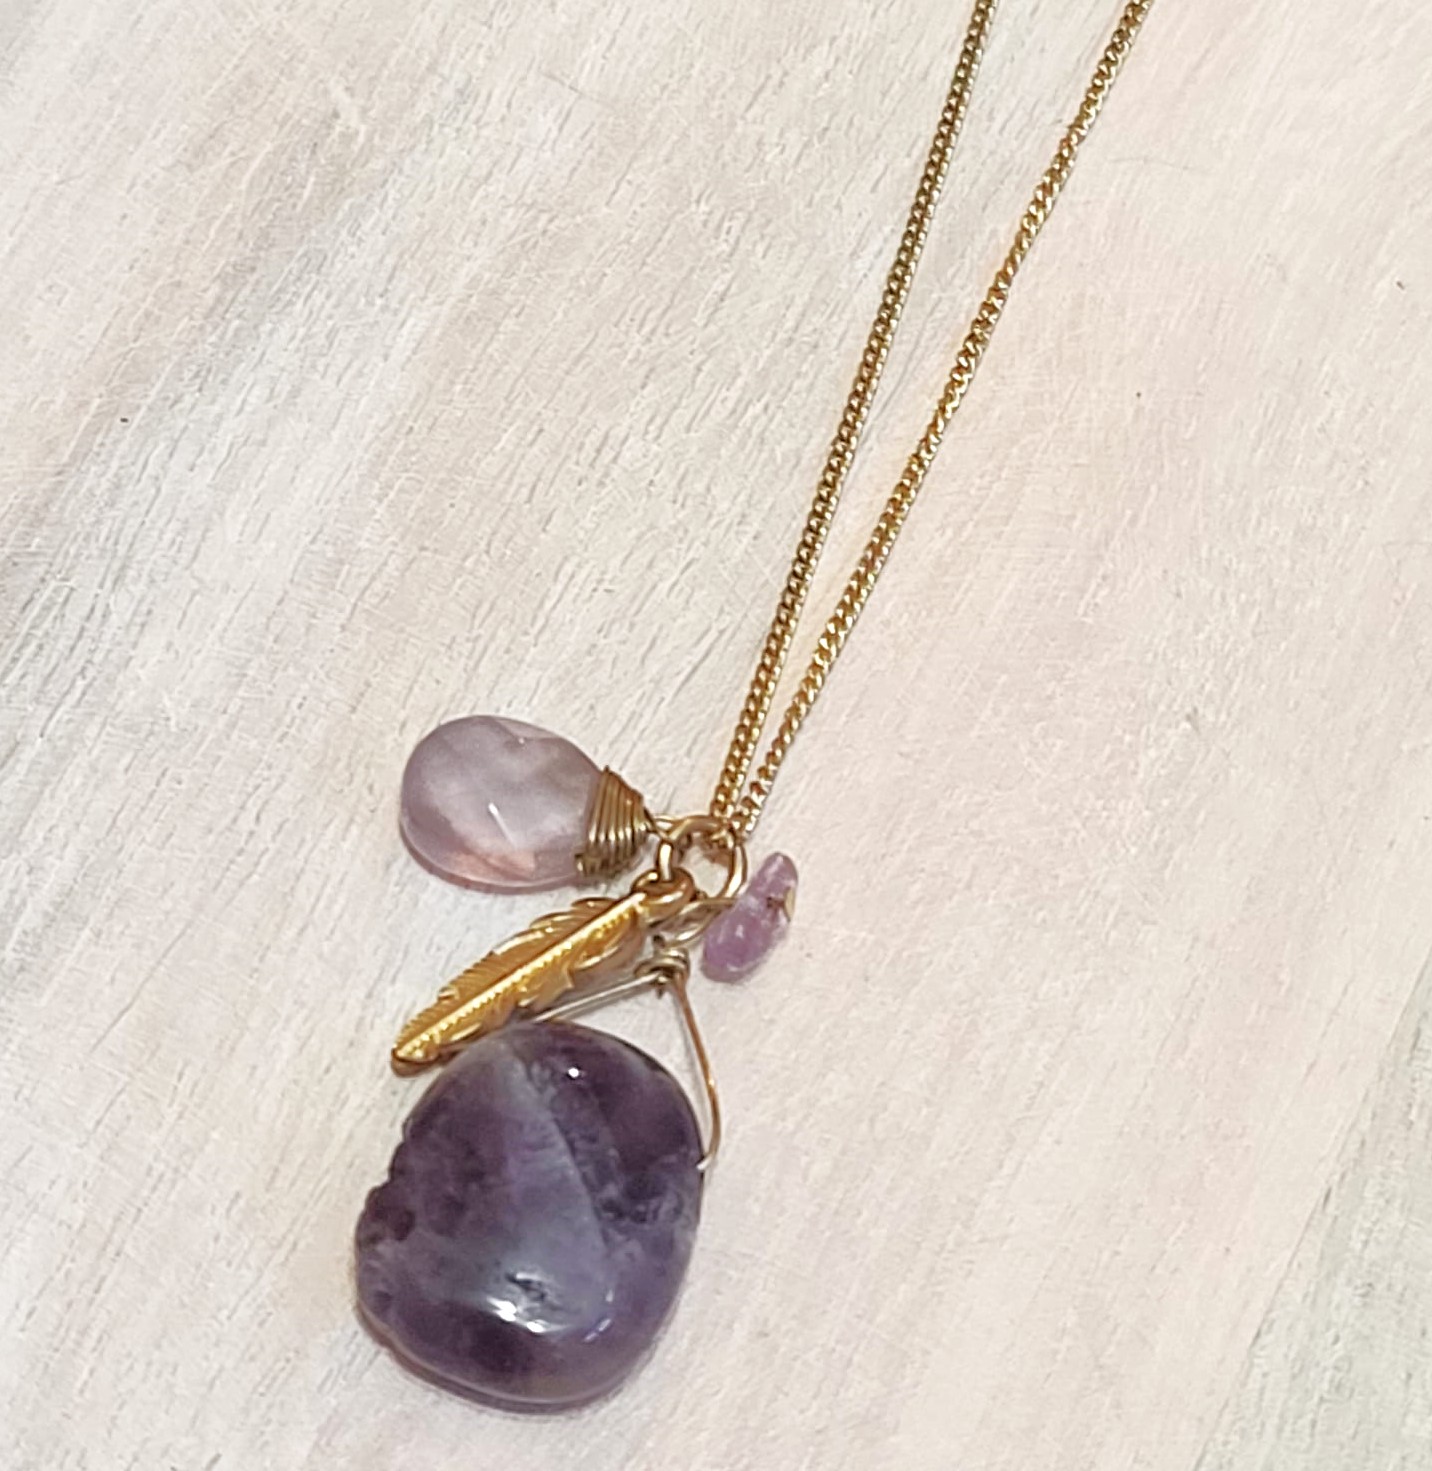 Gemstone pendant necklace, amethyst gemstone pendant, with feather charm, necklace